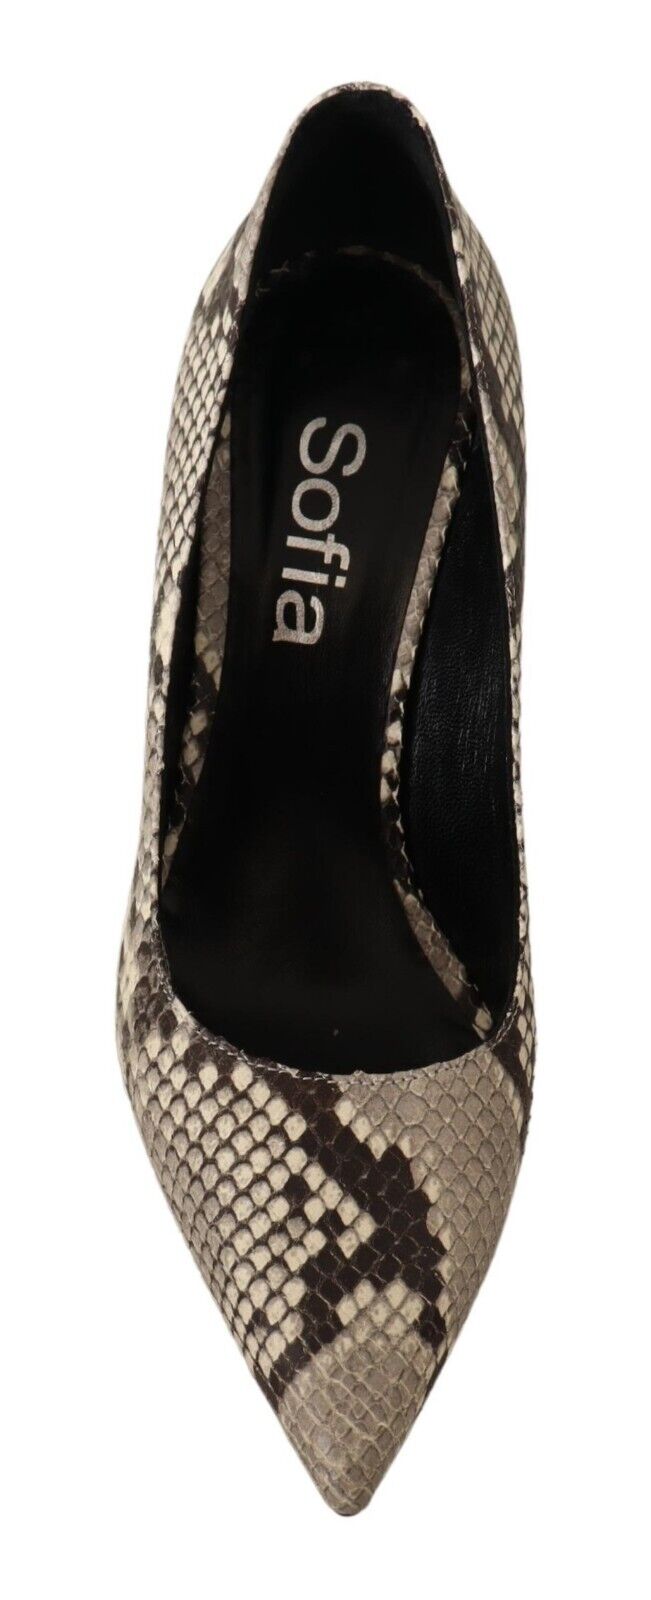 Sofia Gray Snake Skin Leather Stiletto High Heels Pumps Shoes - Fizigo